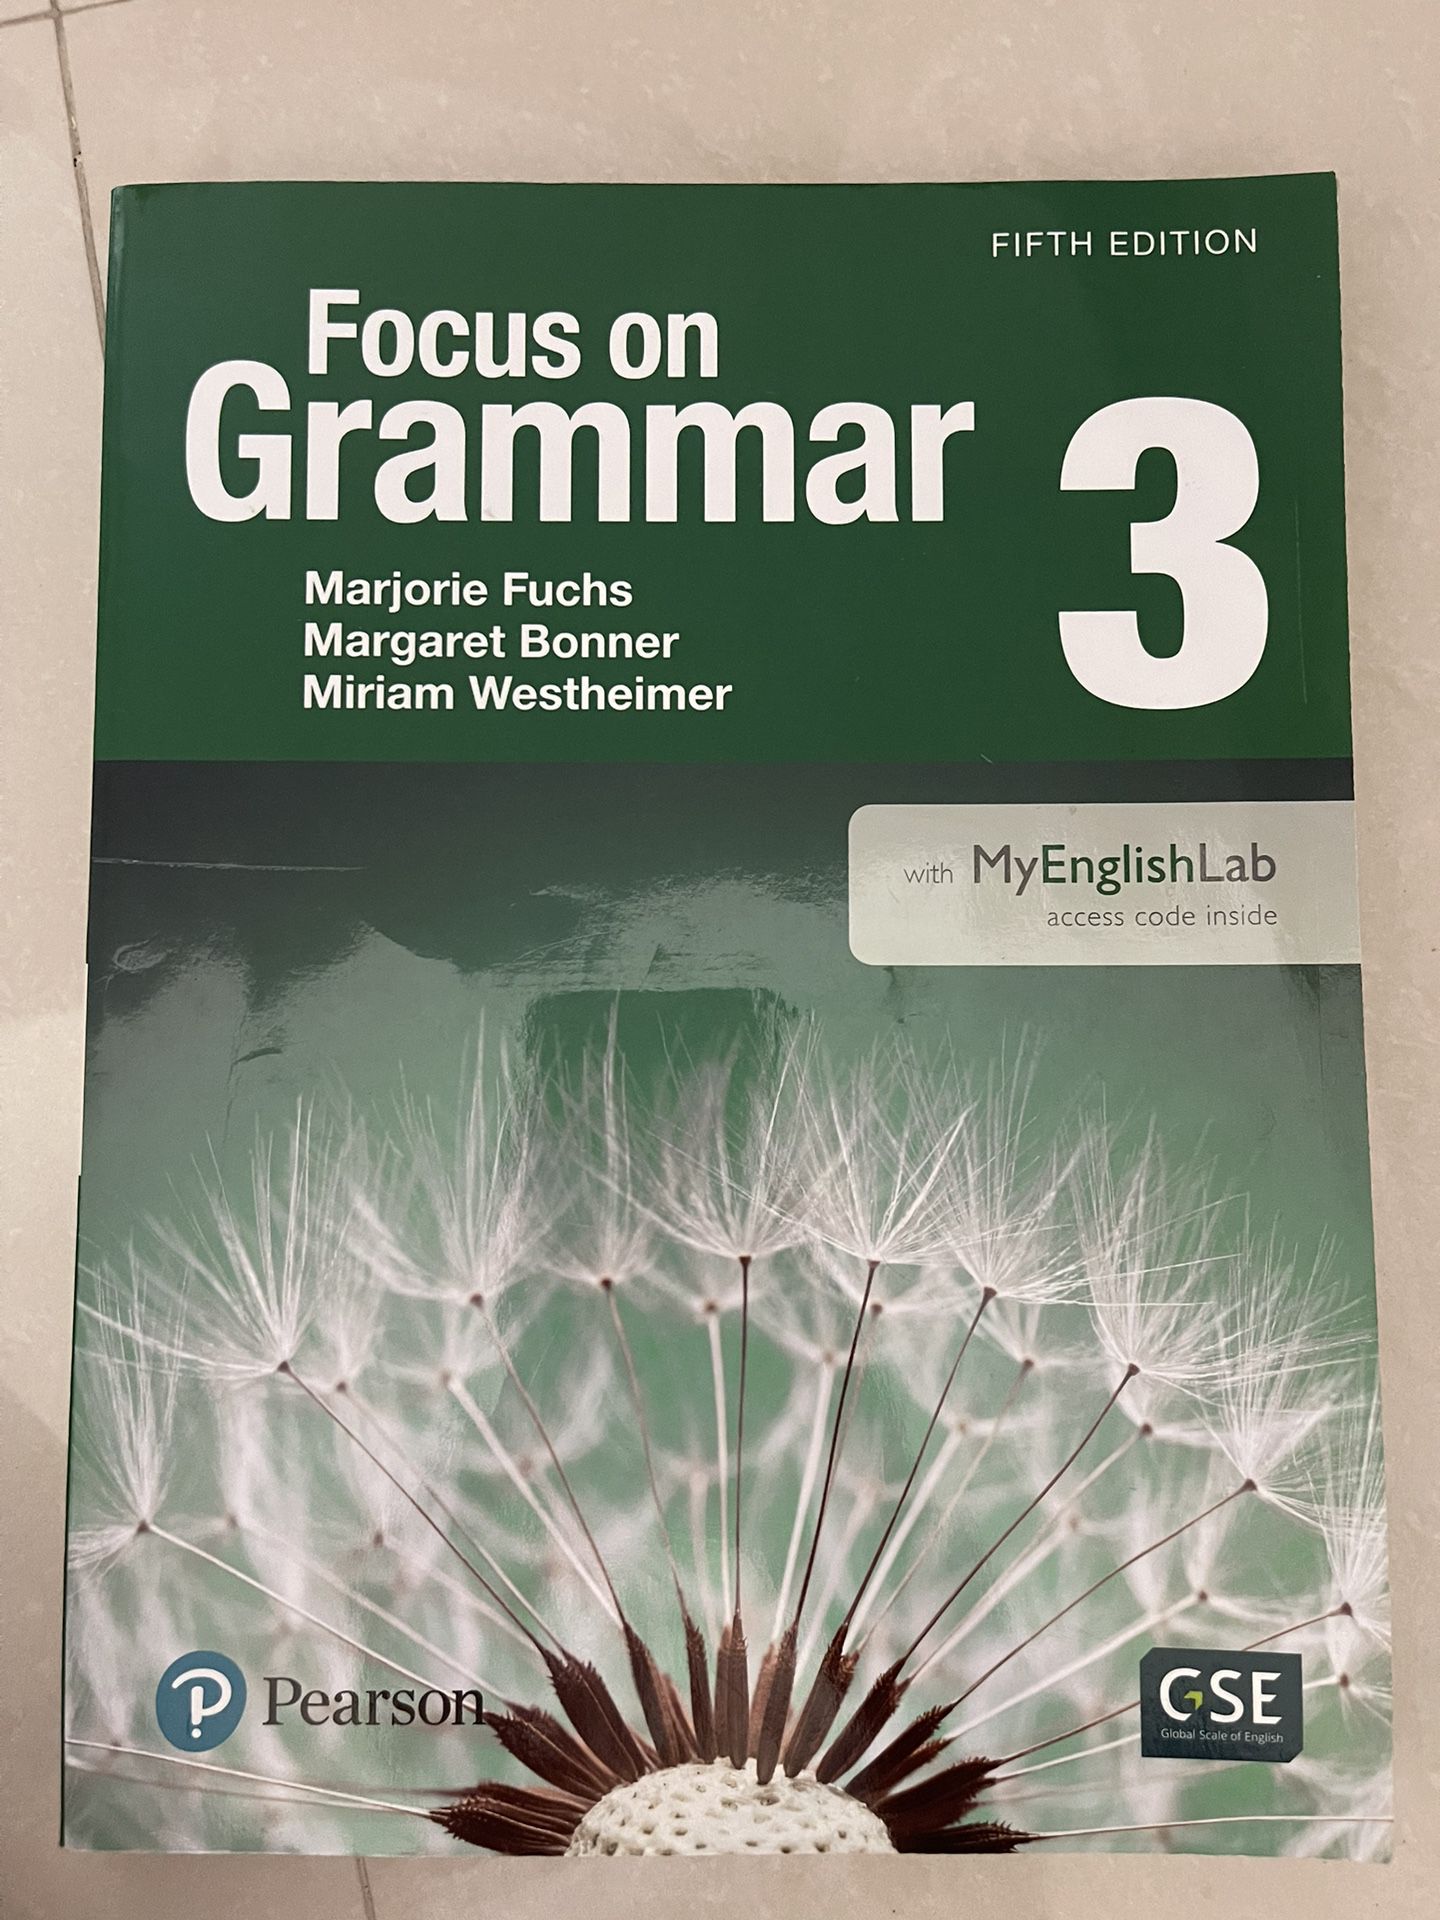 Focus Grammar 3 FREE